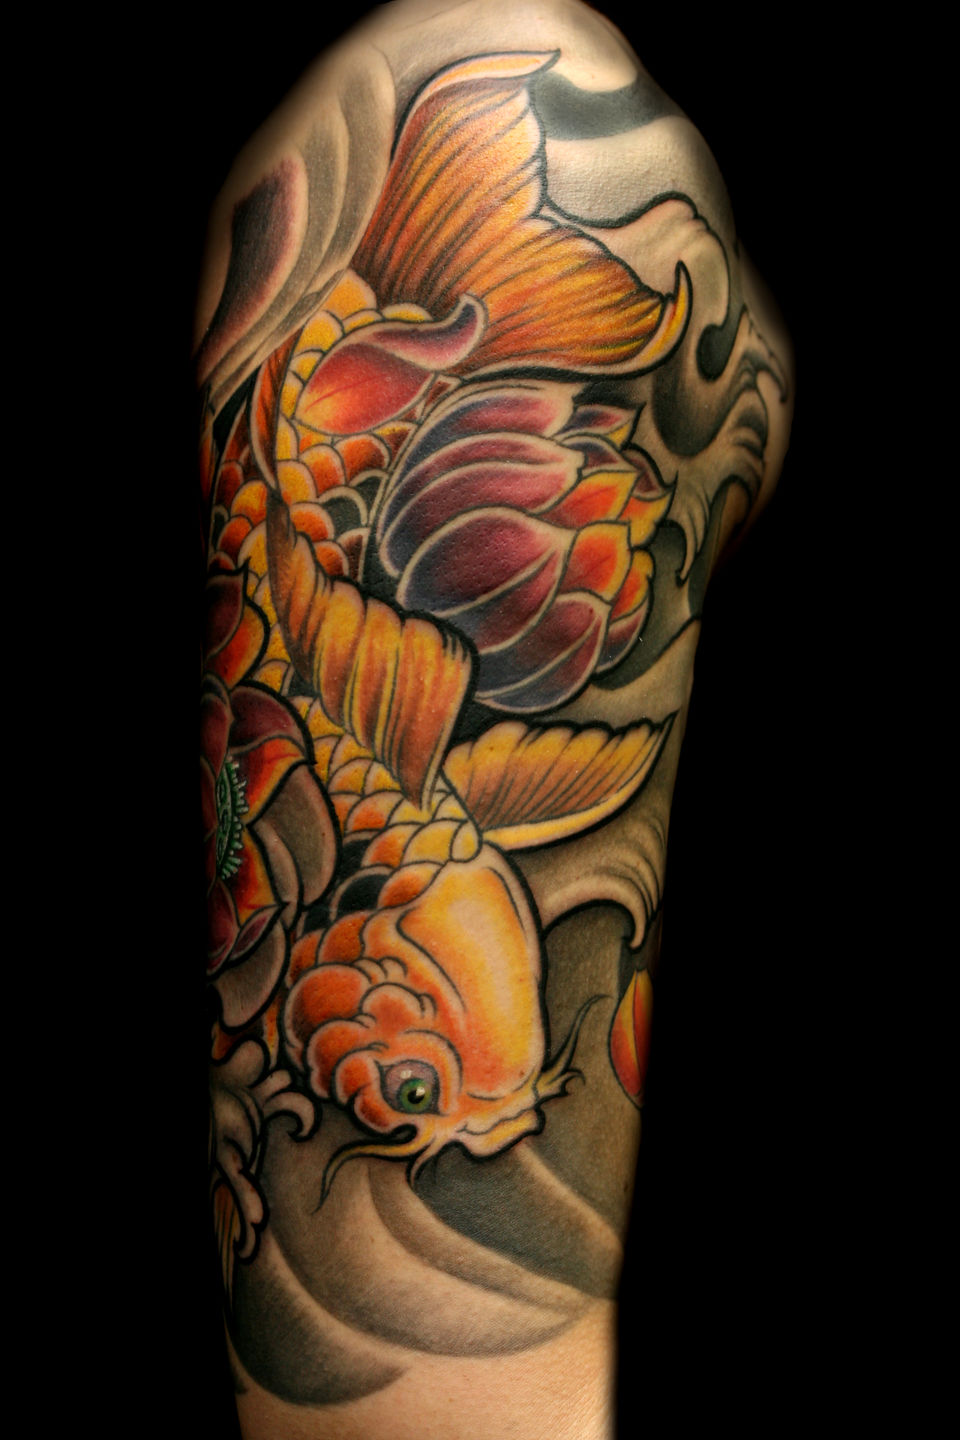 Daruma tattoo by Nick Kelly Big Brain Productions Omaha Ne darumadoll  chesttattoo nickkellytattoos  รอยสกแขน ลายสกญปน การออกแบบรอยสก